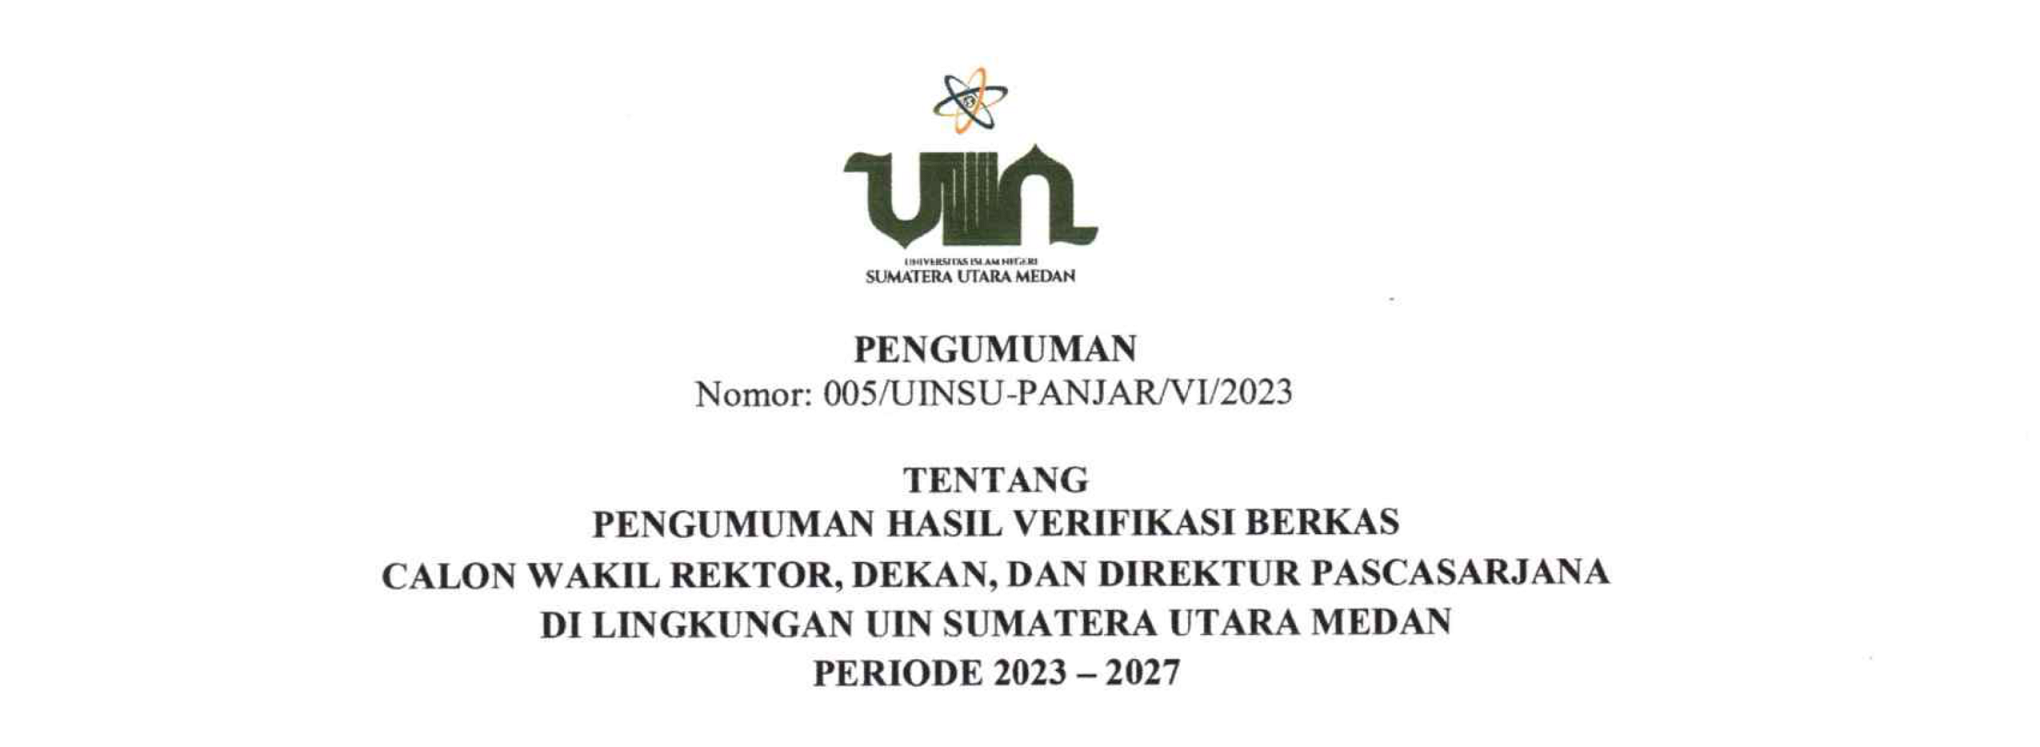 Pengumuman Hasil Verifikasi Berkas Calon Wakil Rektor, Dekan, dan Direktur Pascasarjana di Lingkungan UIN Sumatera Utara Medan Periode 2023-2027